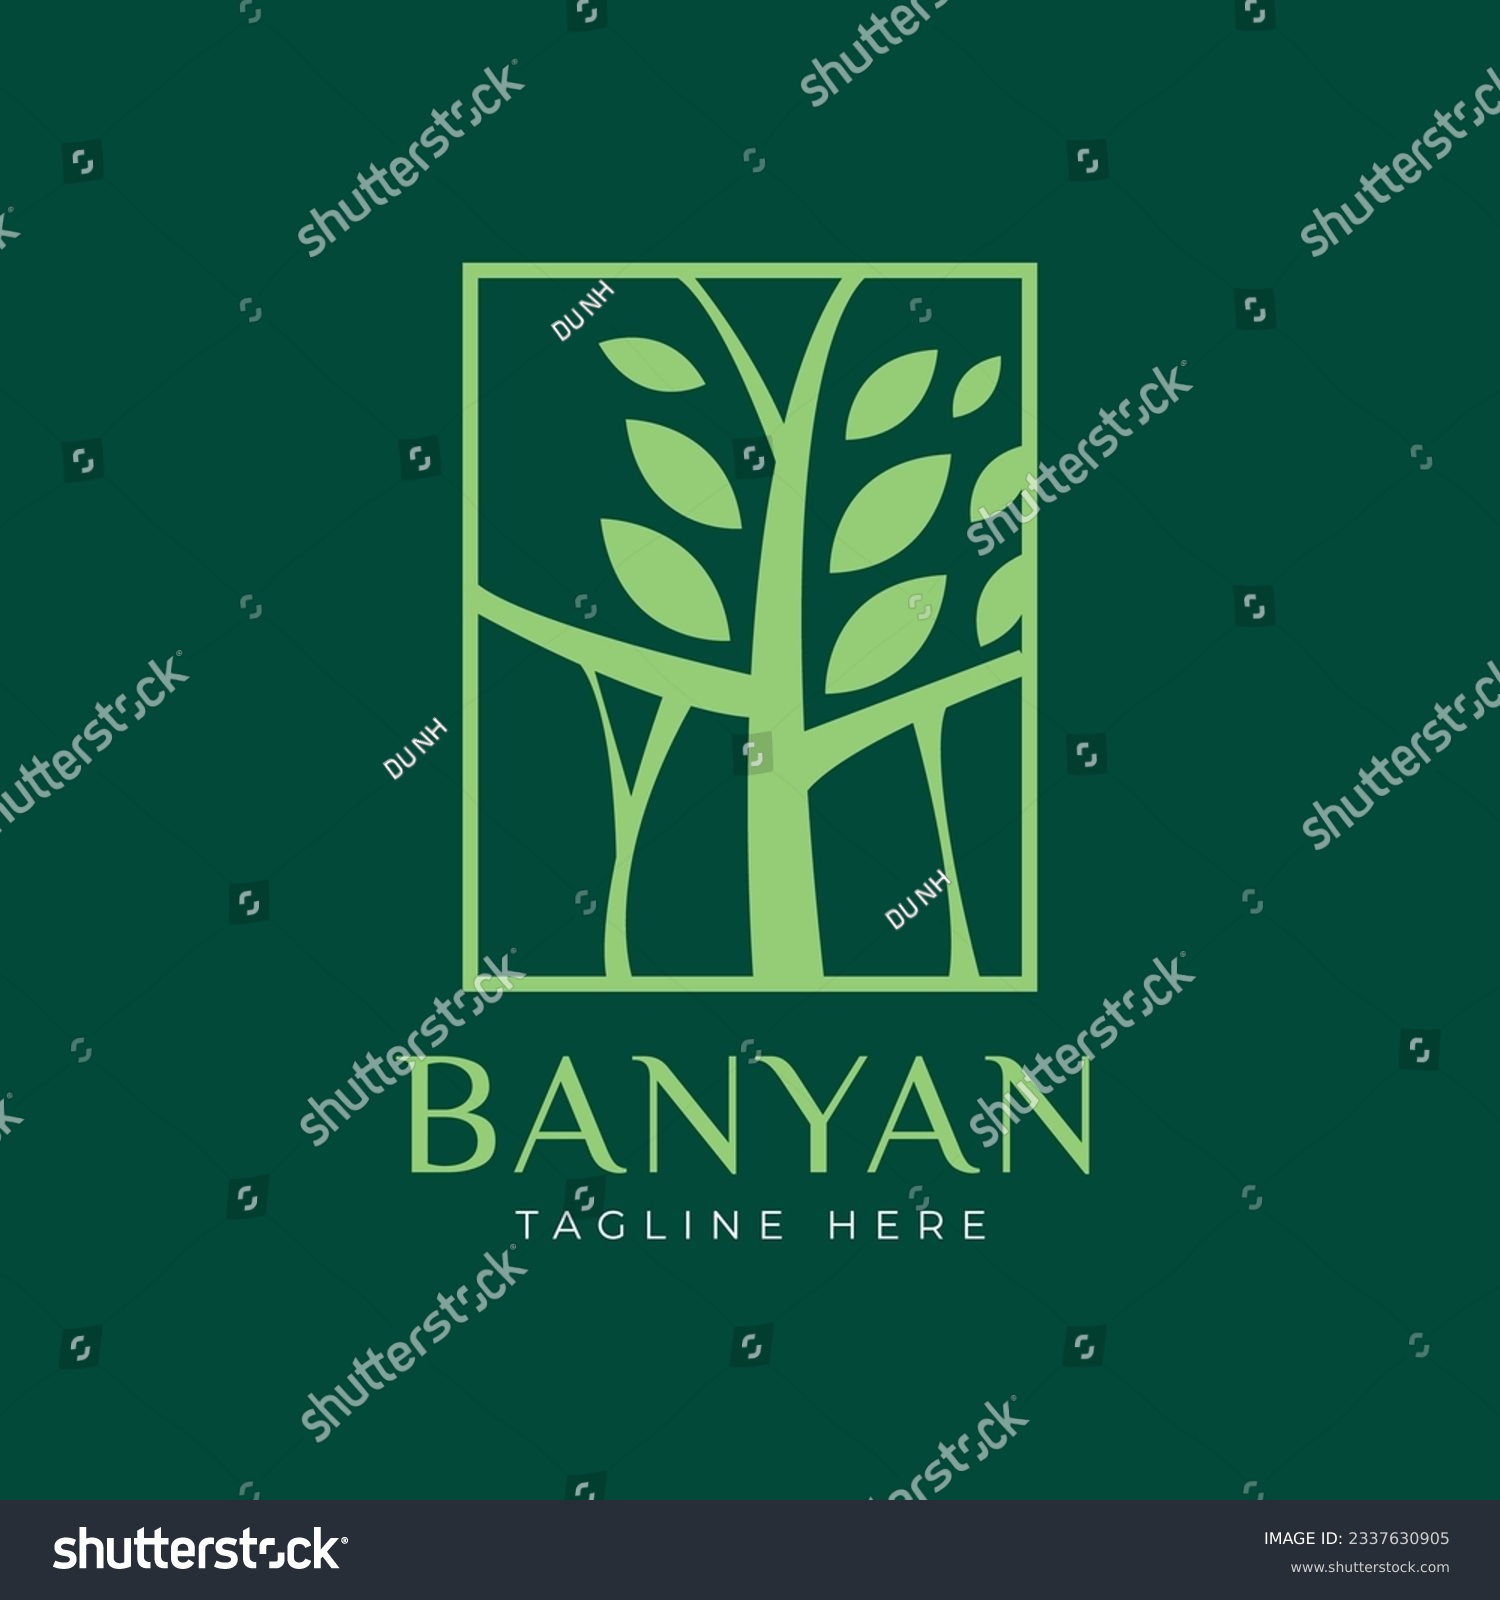 SVG of Illustration of banyan tree minimalist creative logo svg